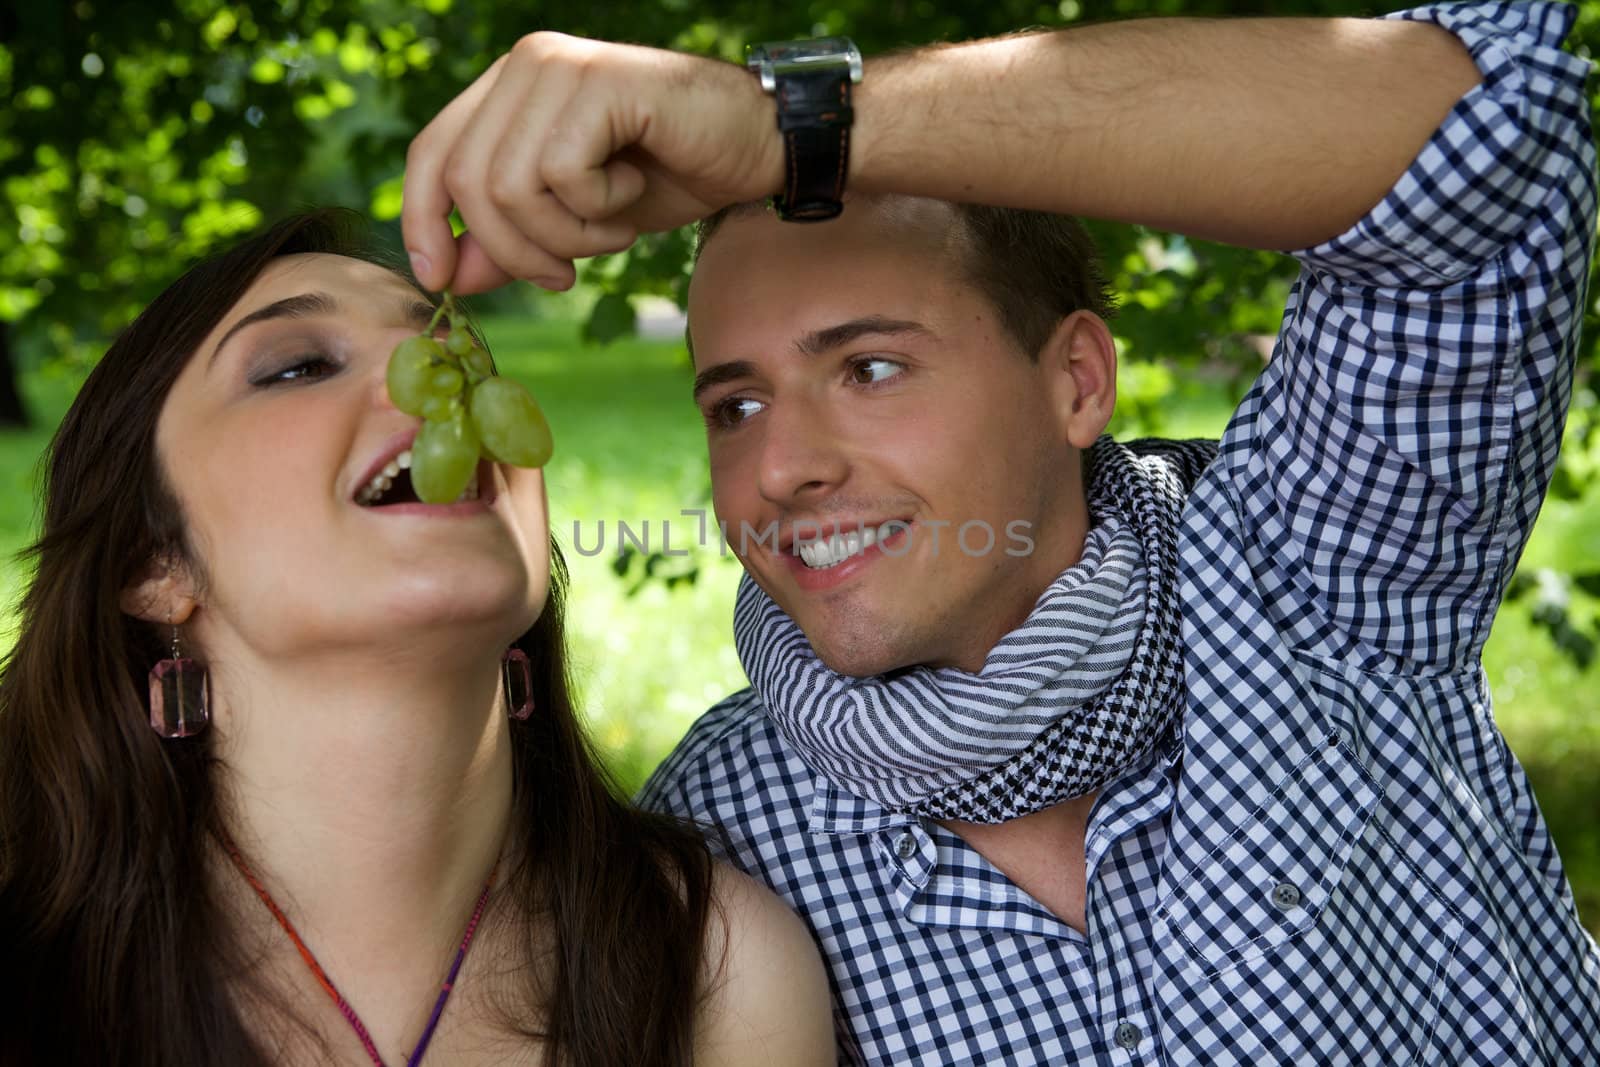 Boyfriend feeding girlfriend